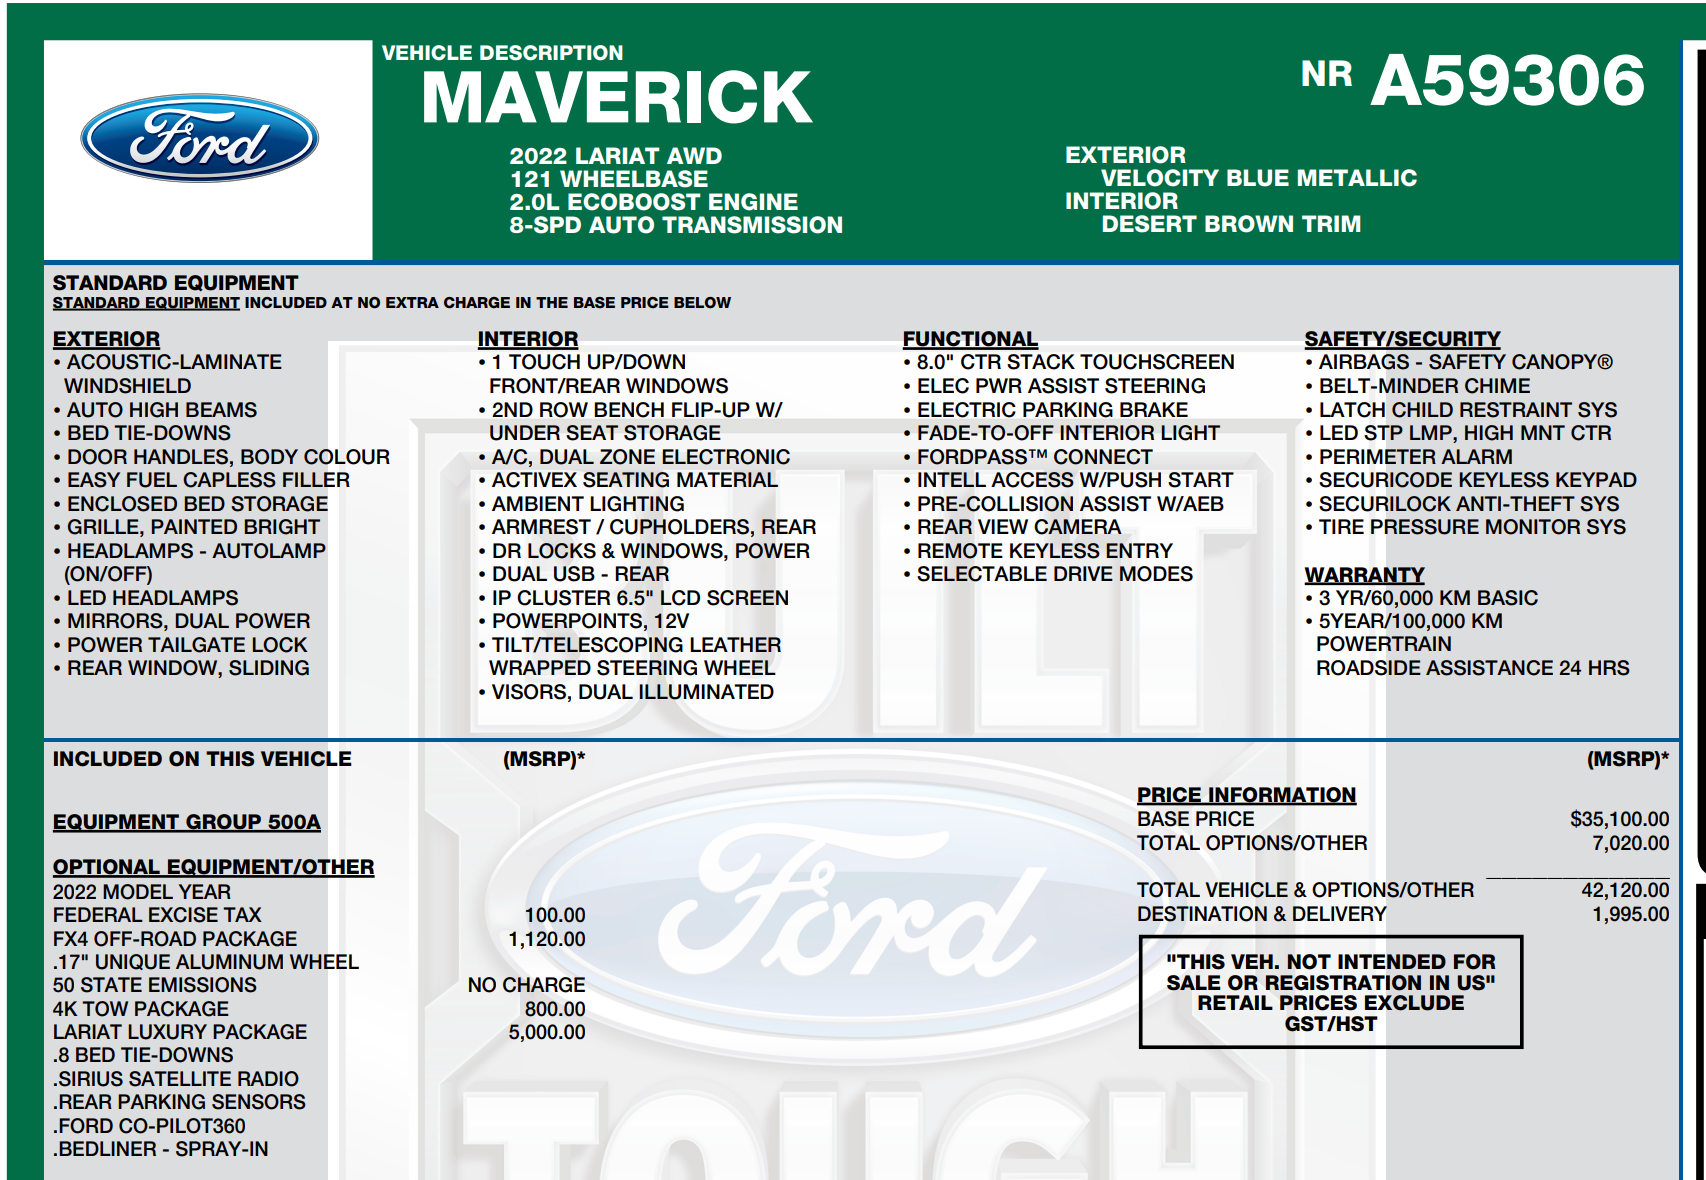 Got my window sticker! | Ford Maverick Forum